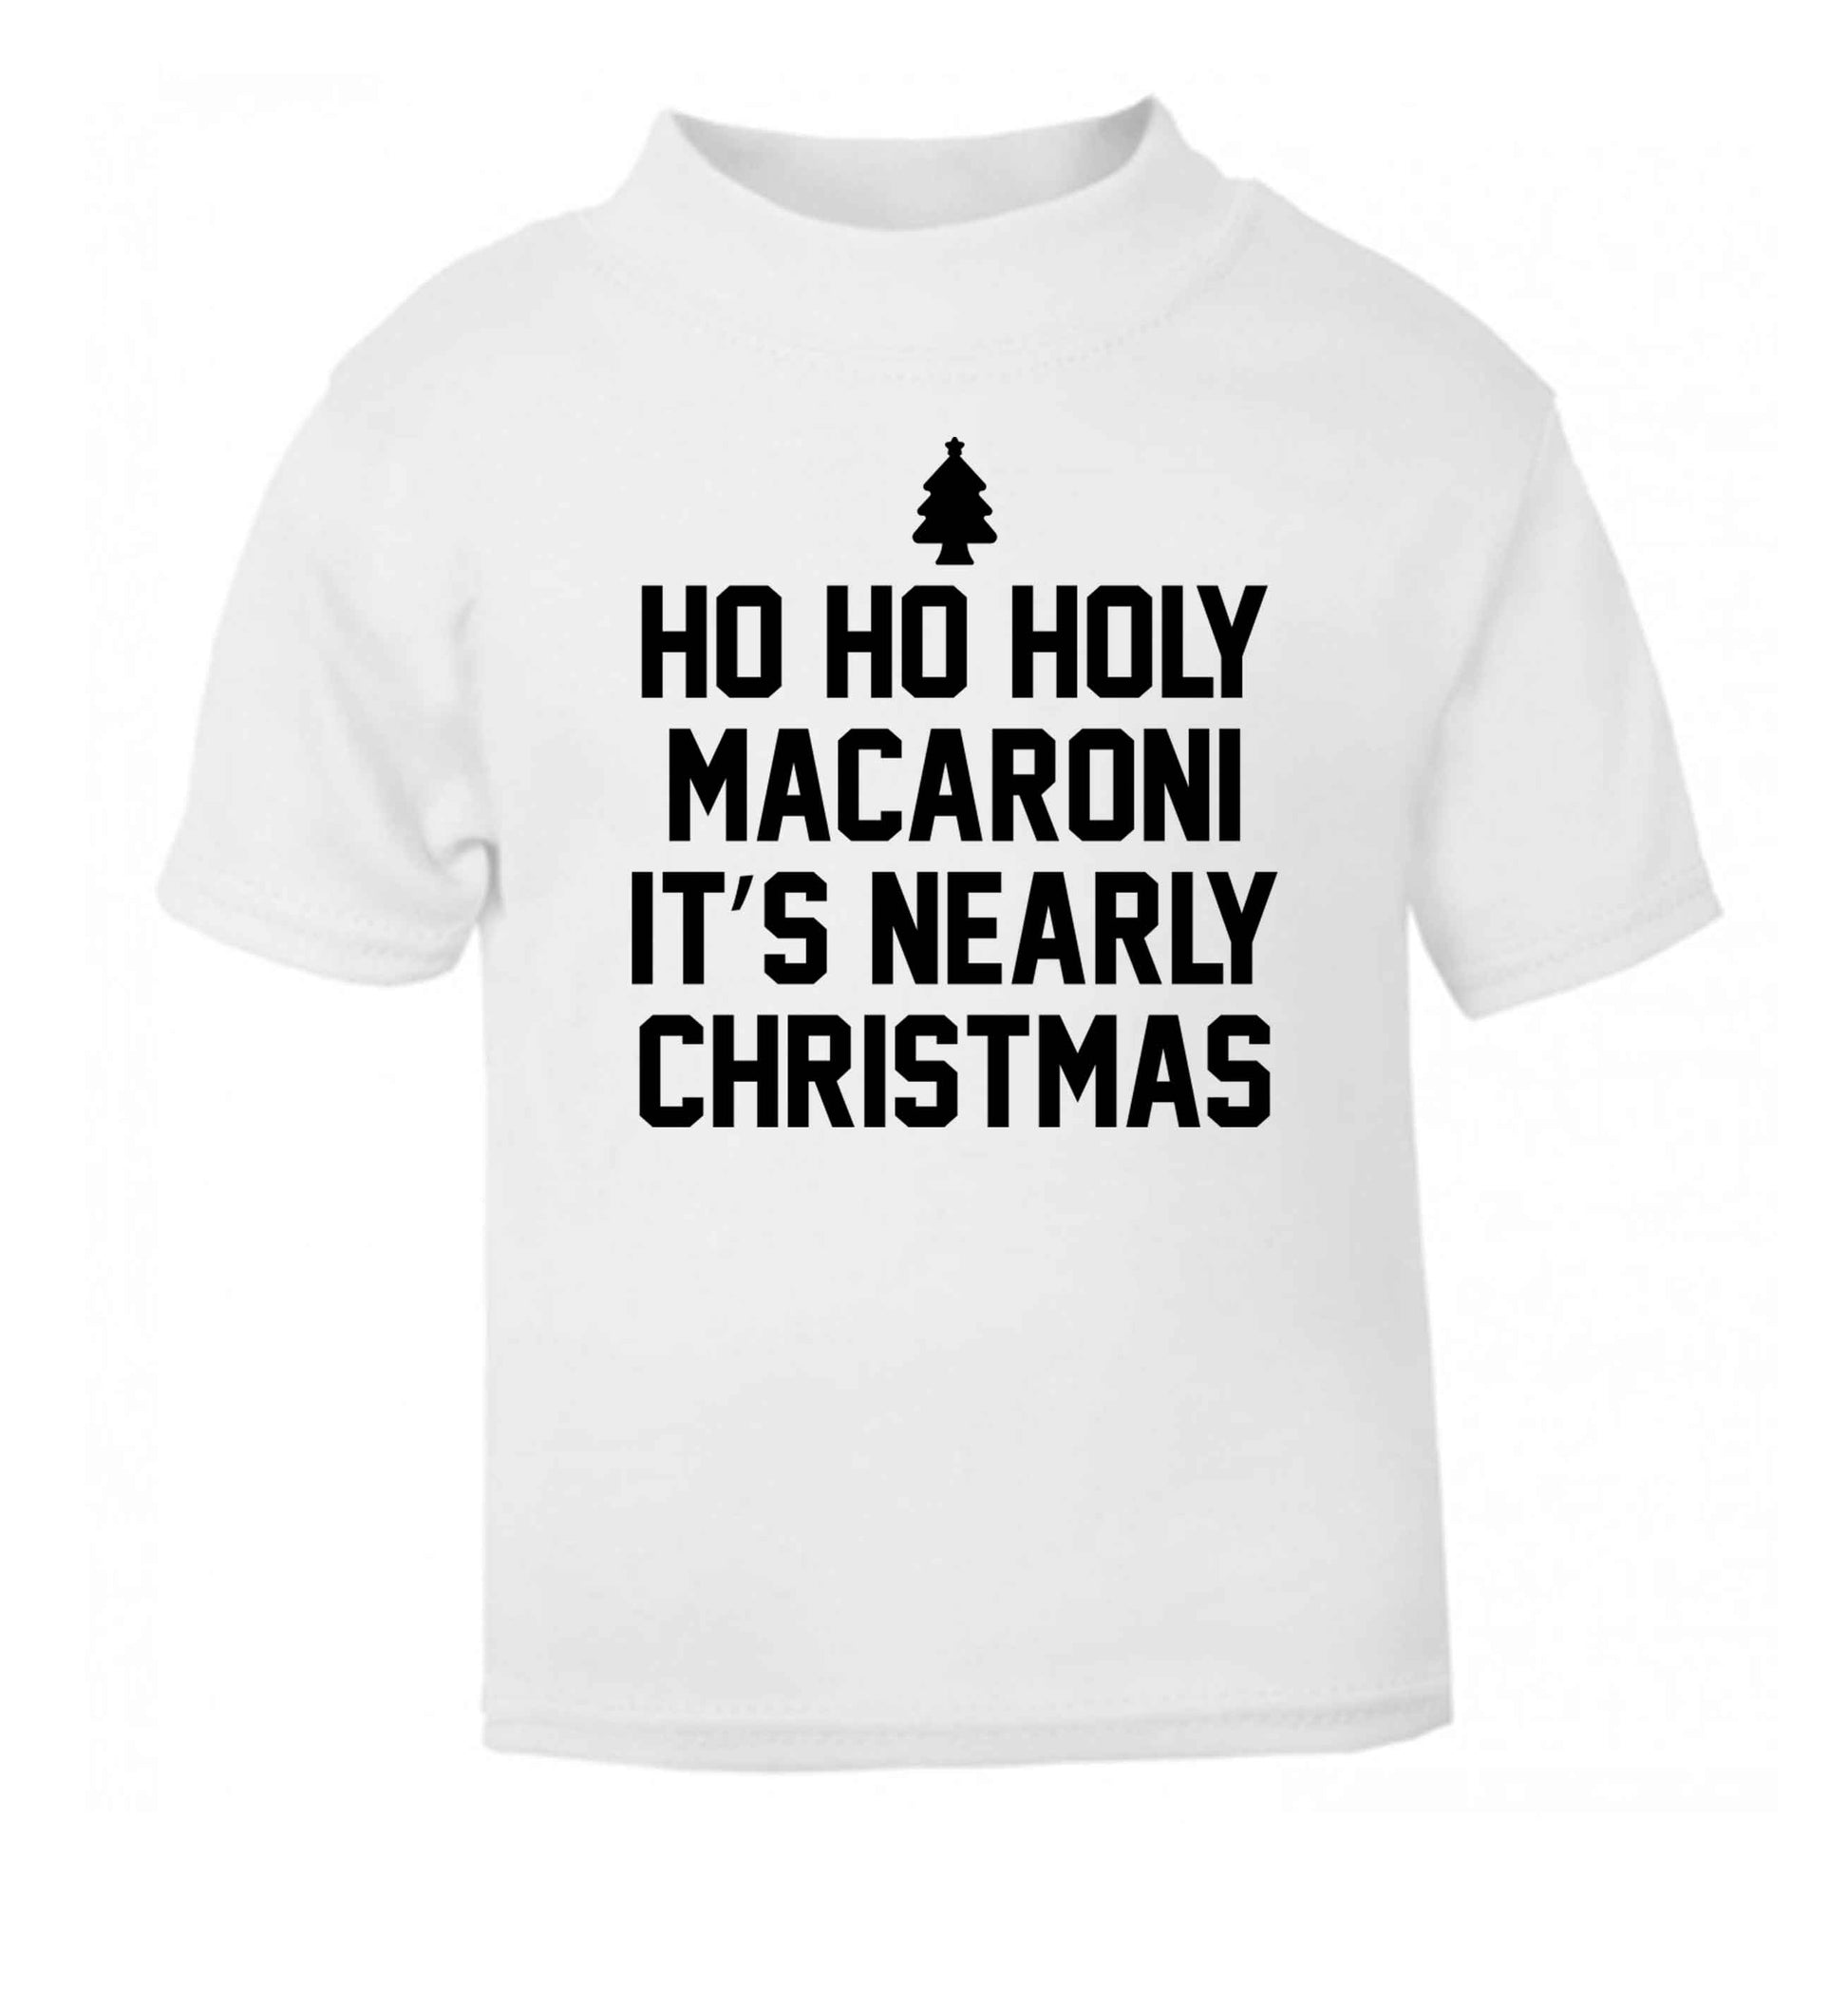 Ho ho holy macaroni it's nearly Christmas white Baby Toddler Tshirt 2 Years